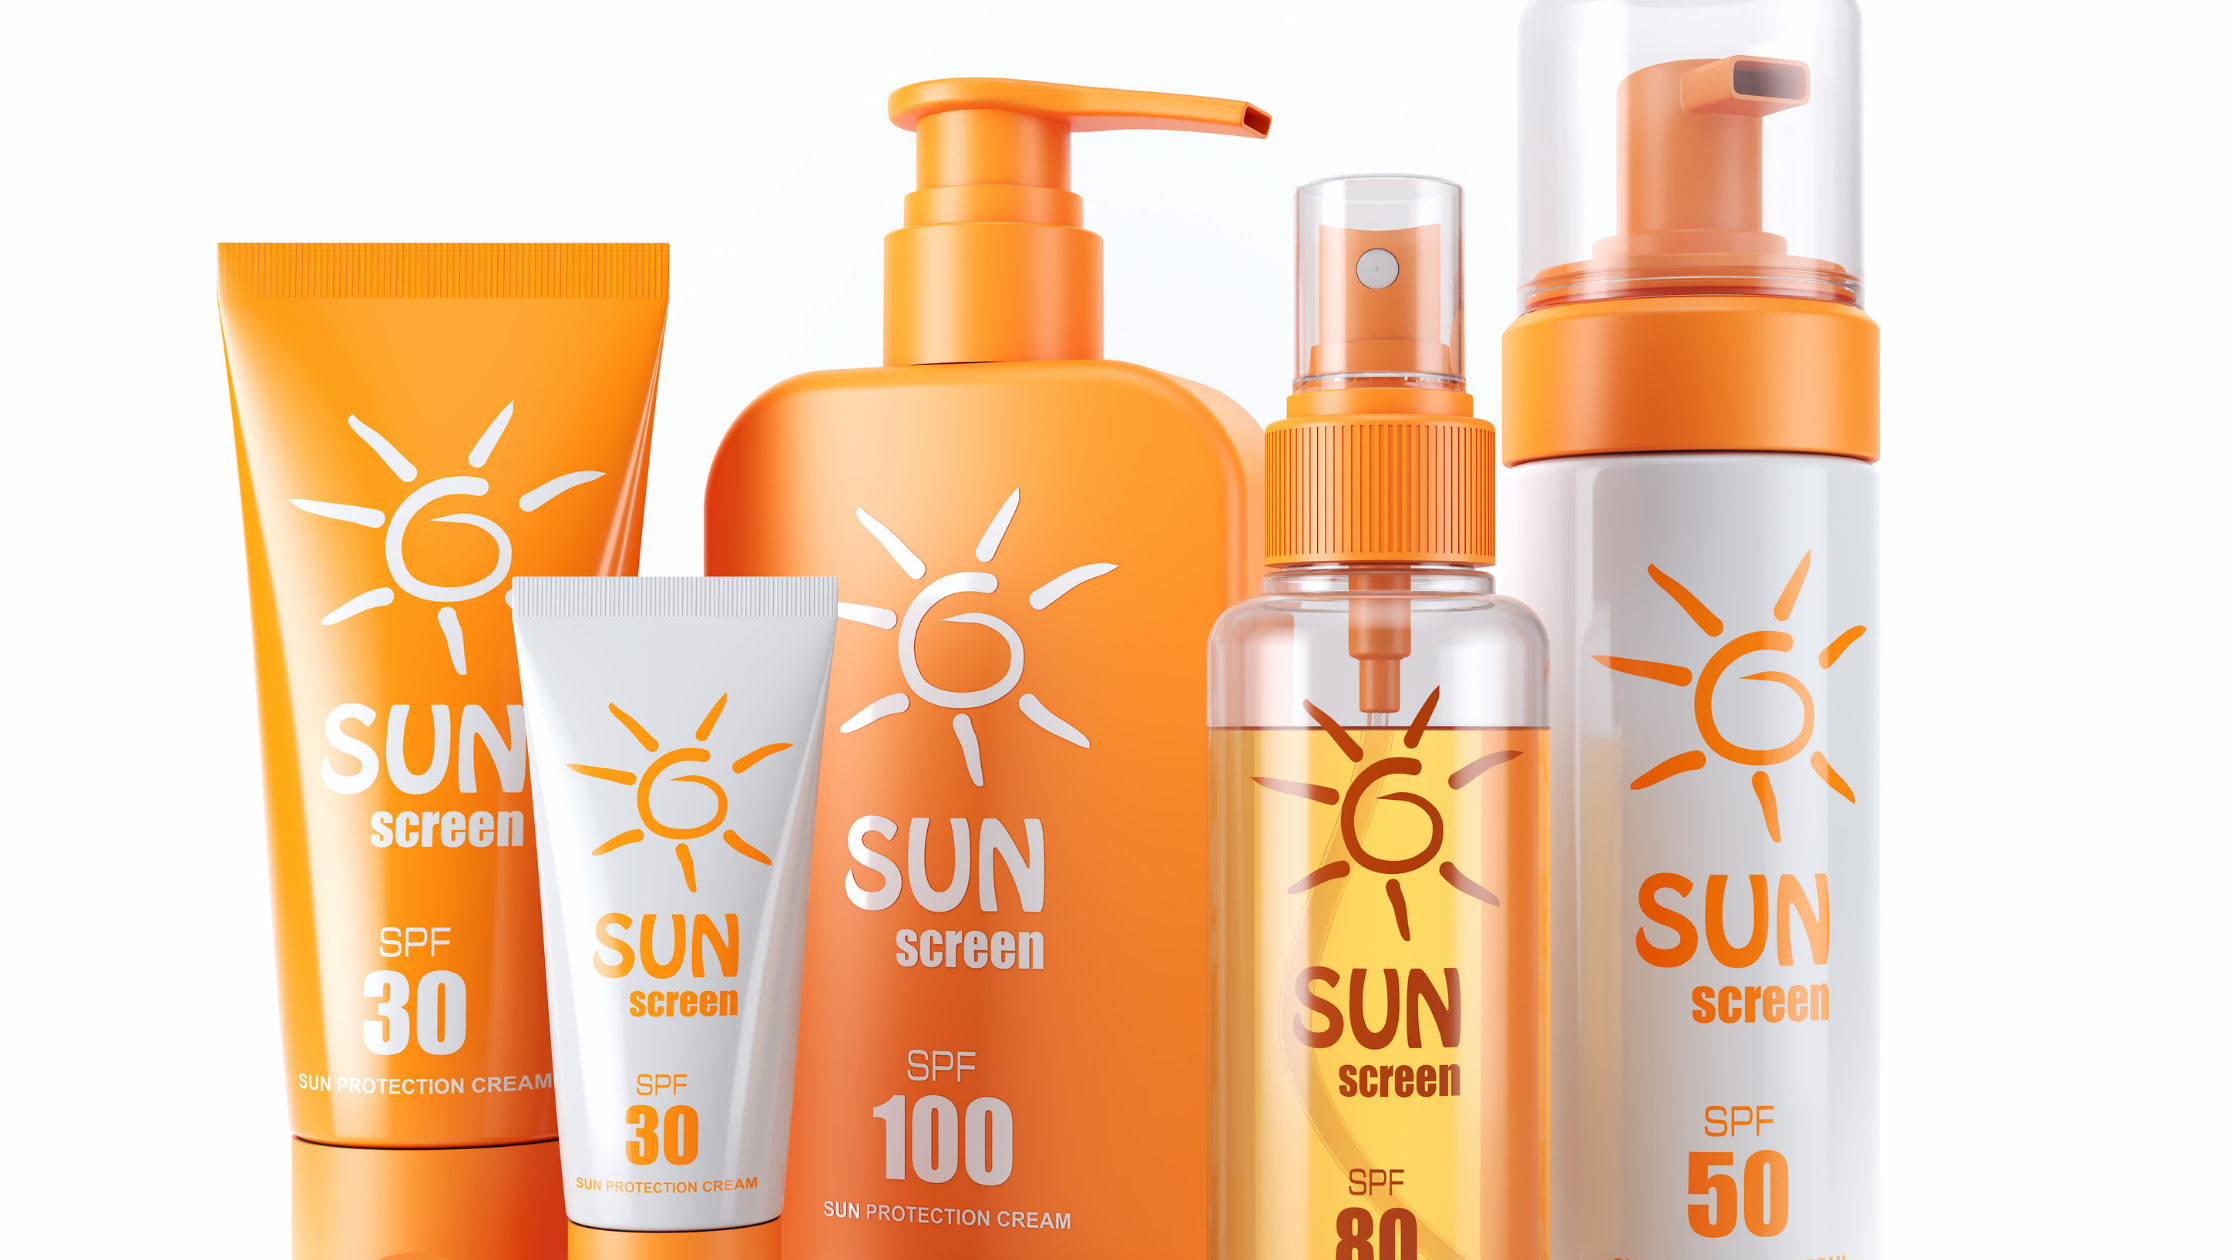 Various sun tan lotion bottles